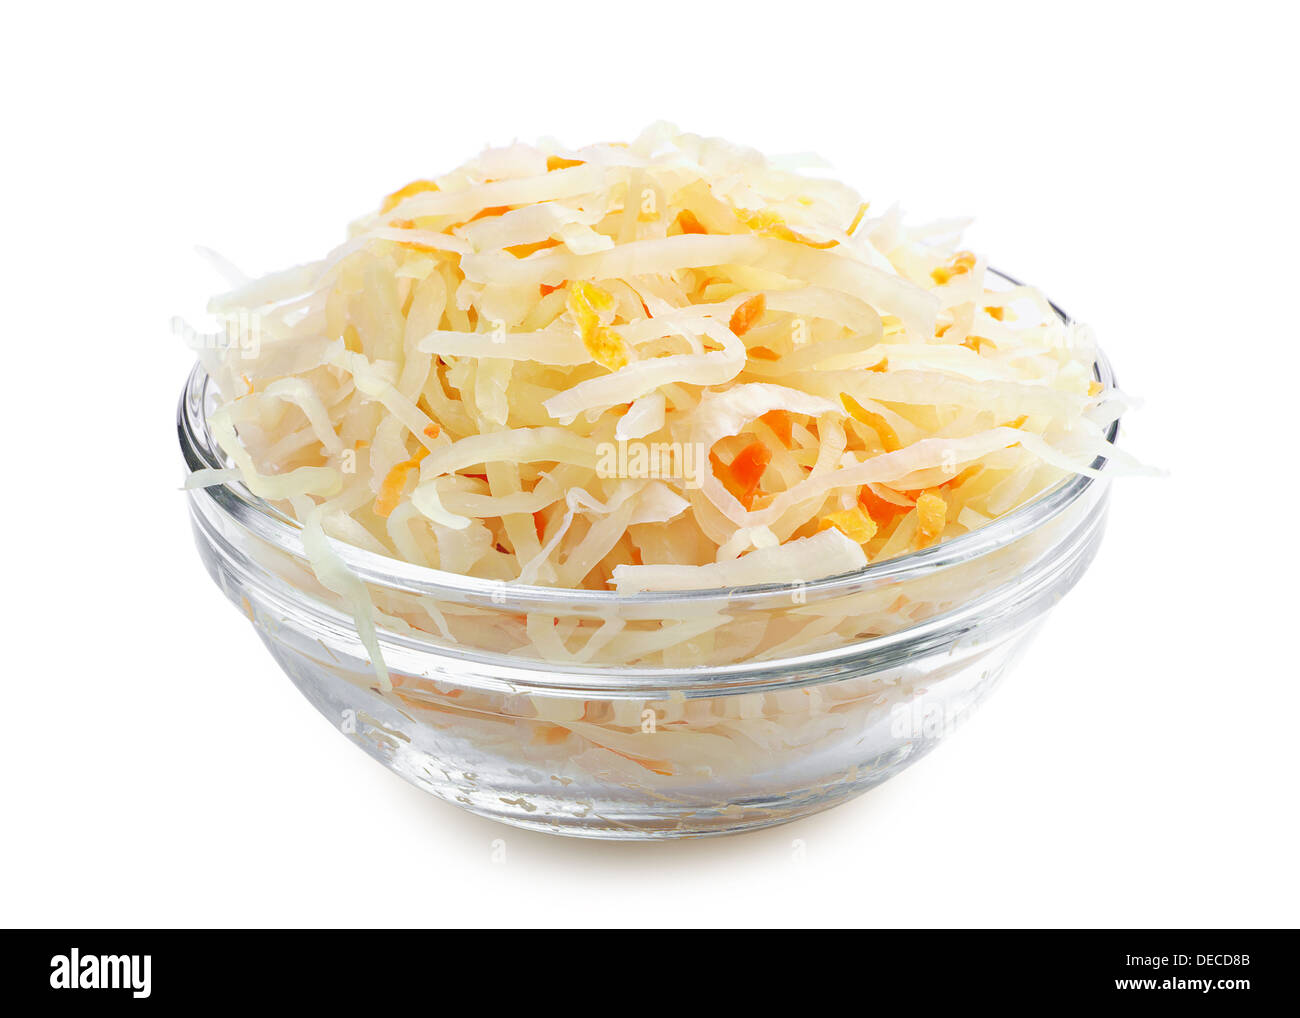 Sauerkraut in transparent glass bowl on white Stock Photo